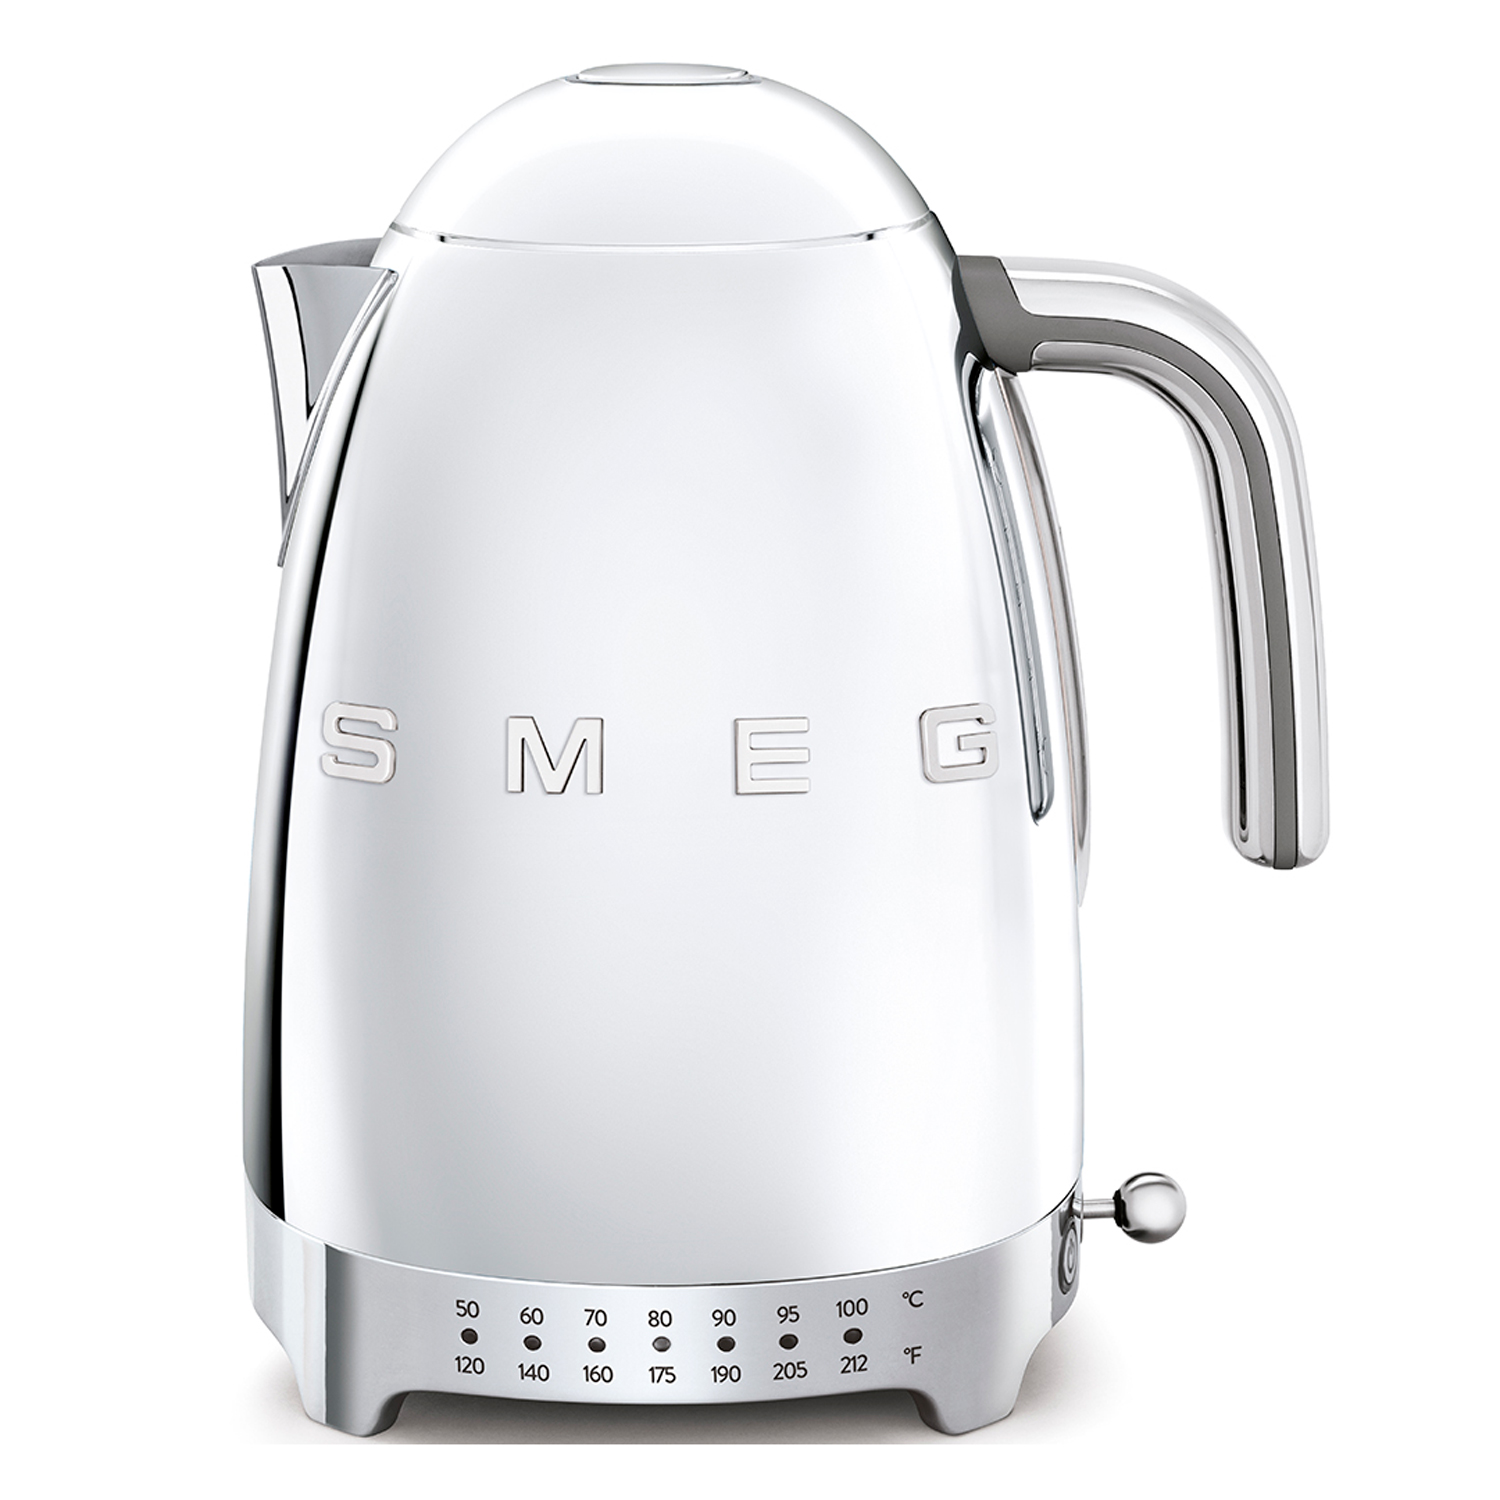 Smeg polished variable temperature kettle